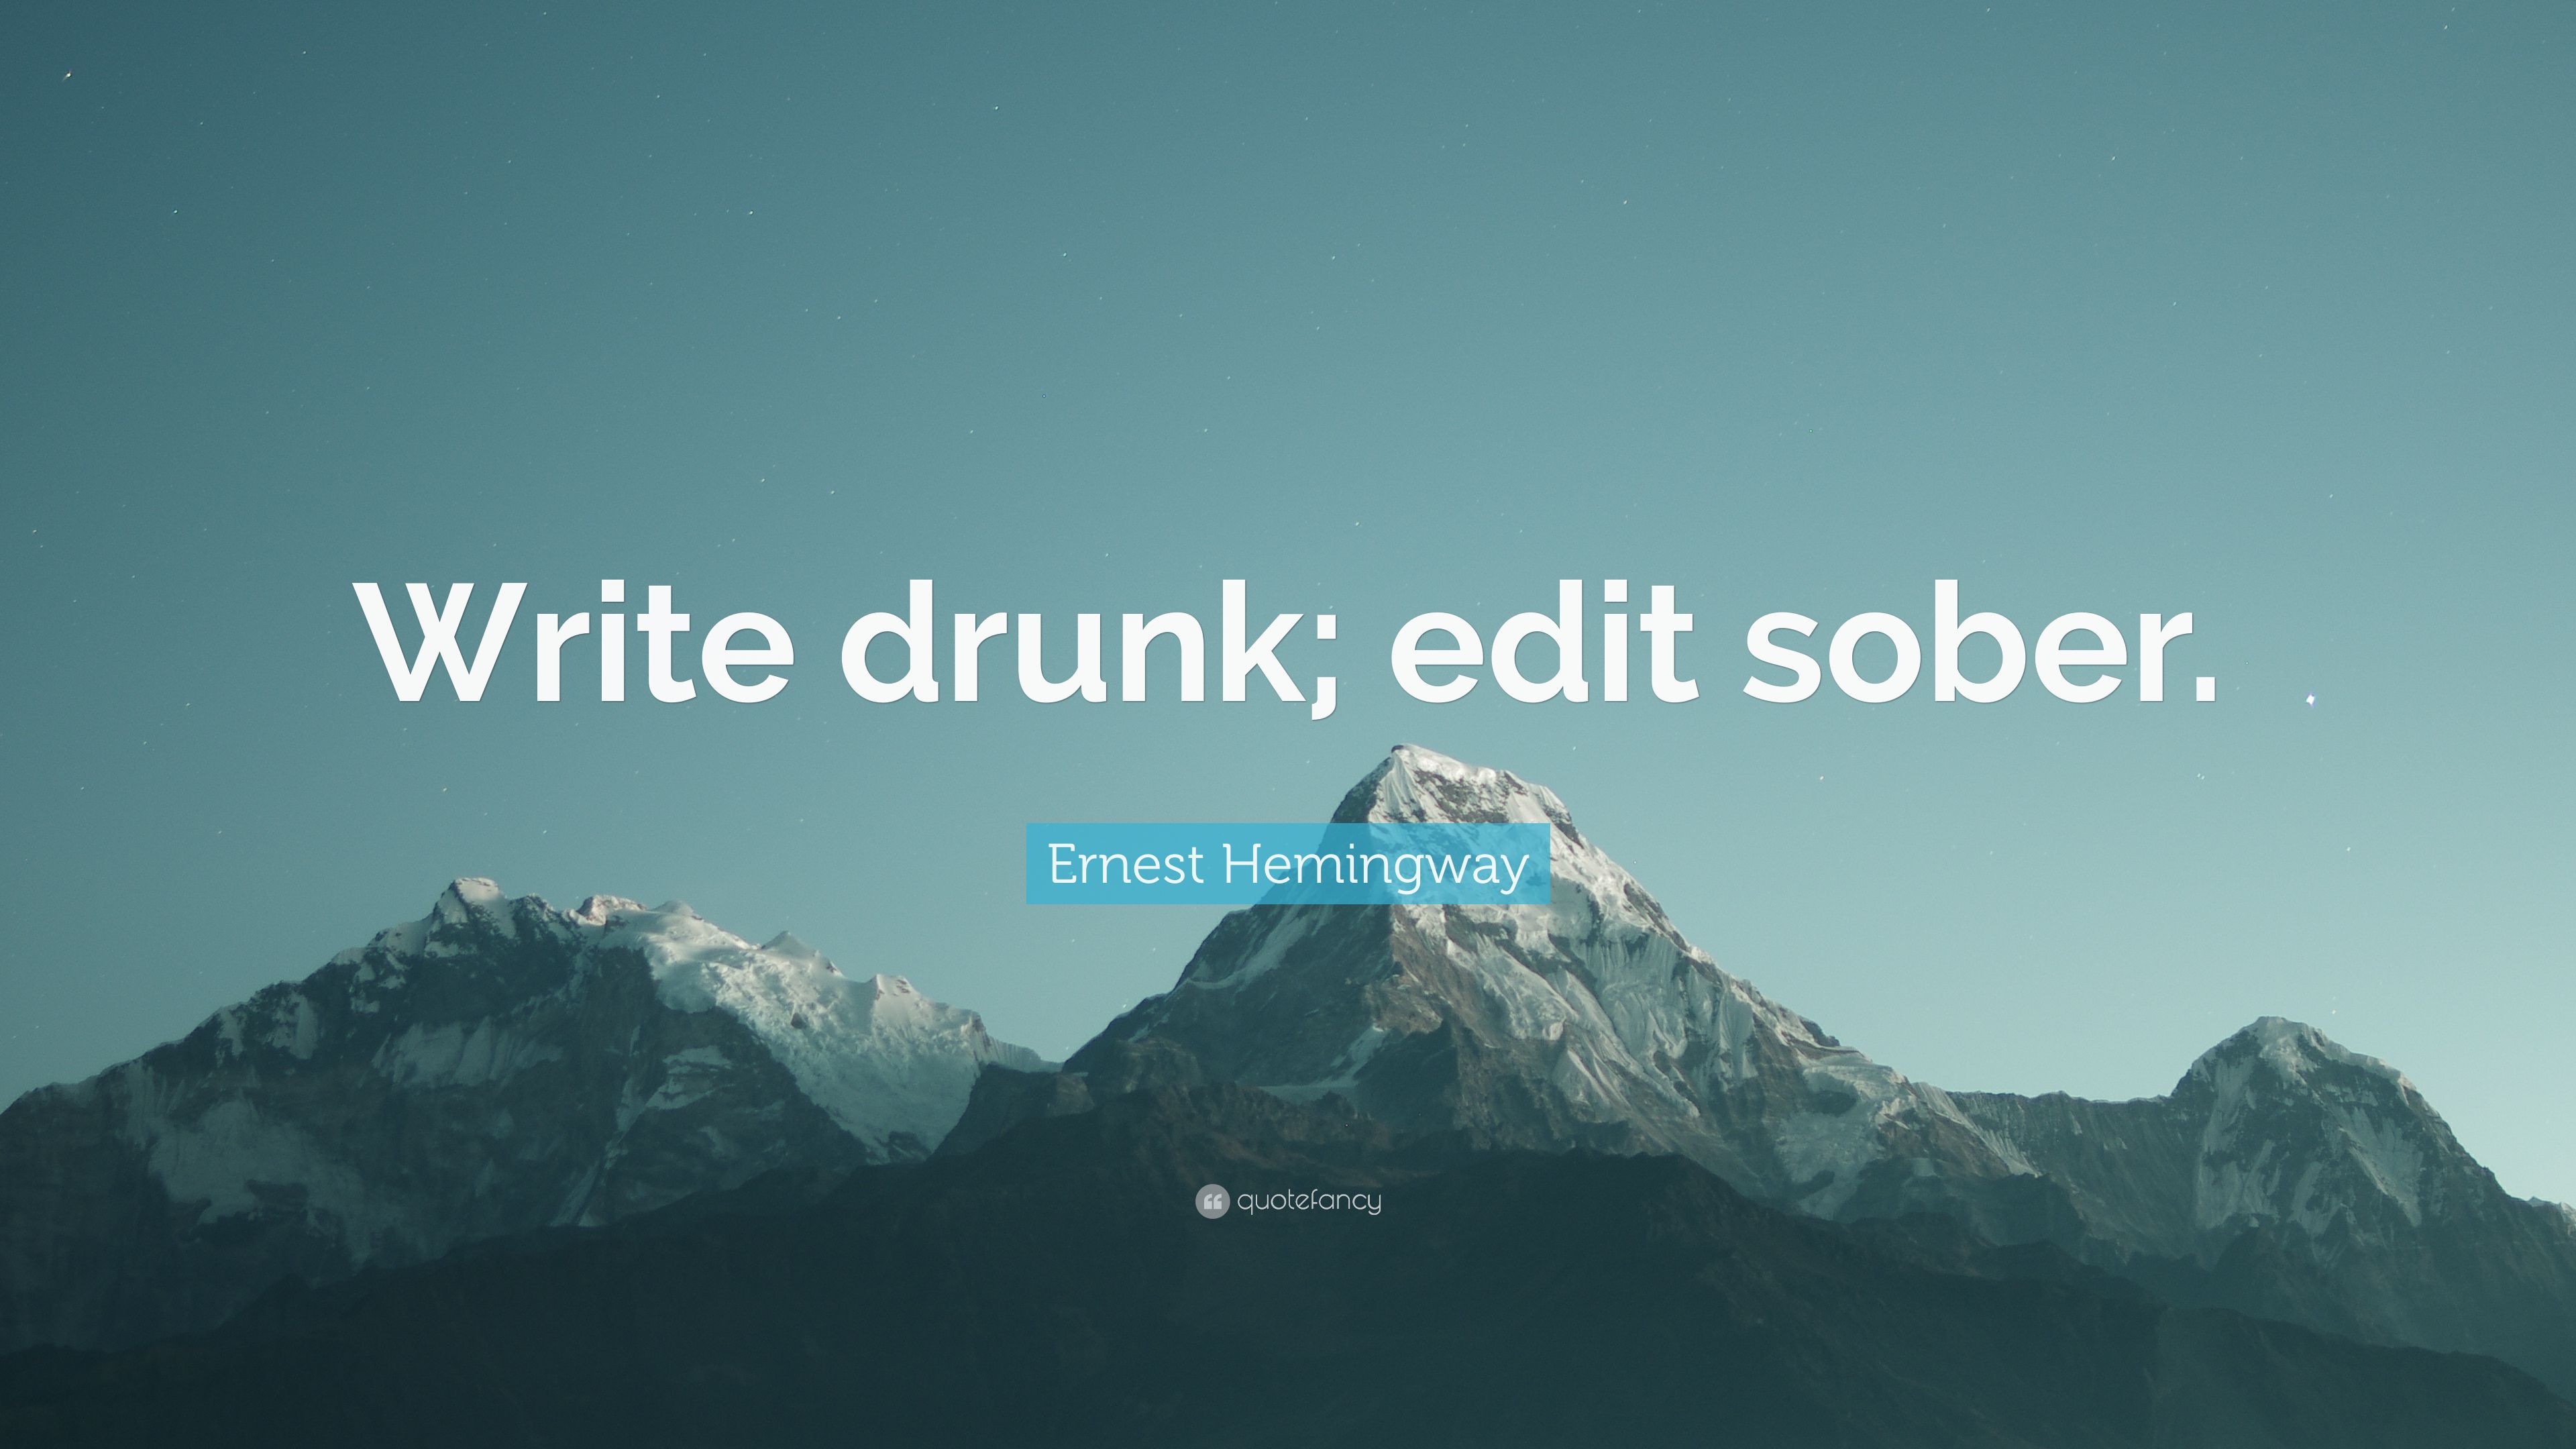 Ernest Hemingway Quote: “Write drunk; edit sober.” (12 wallpaper)